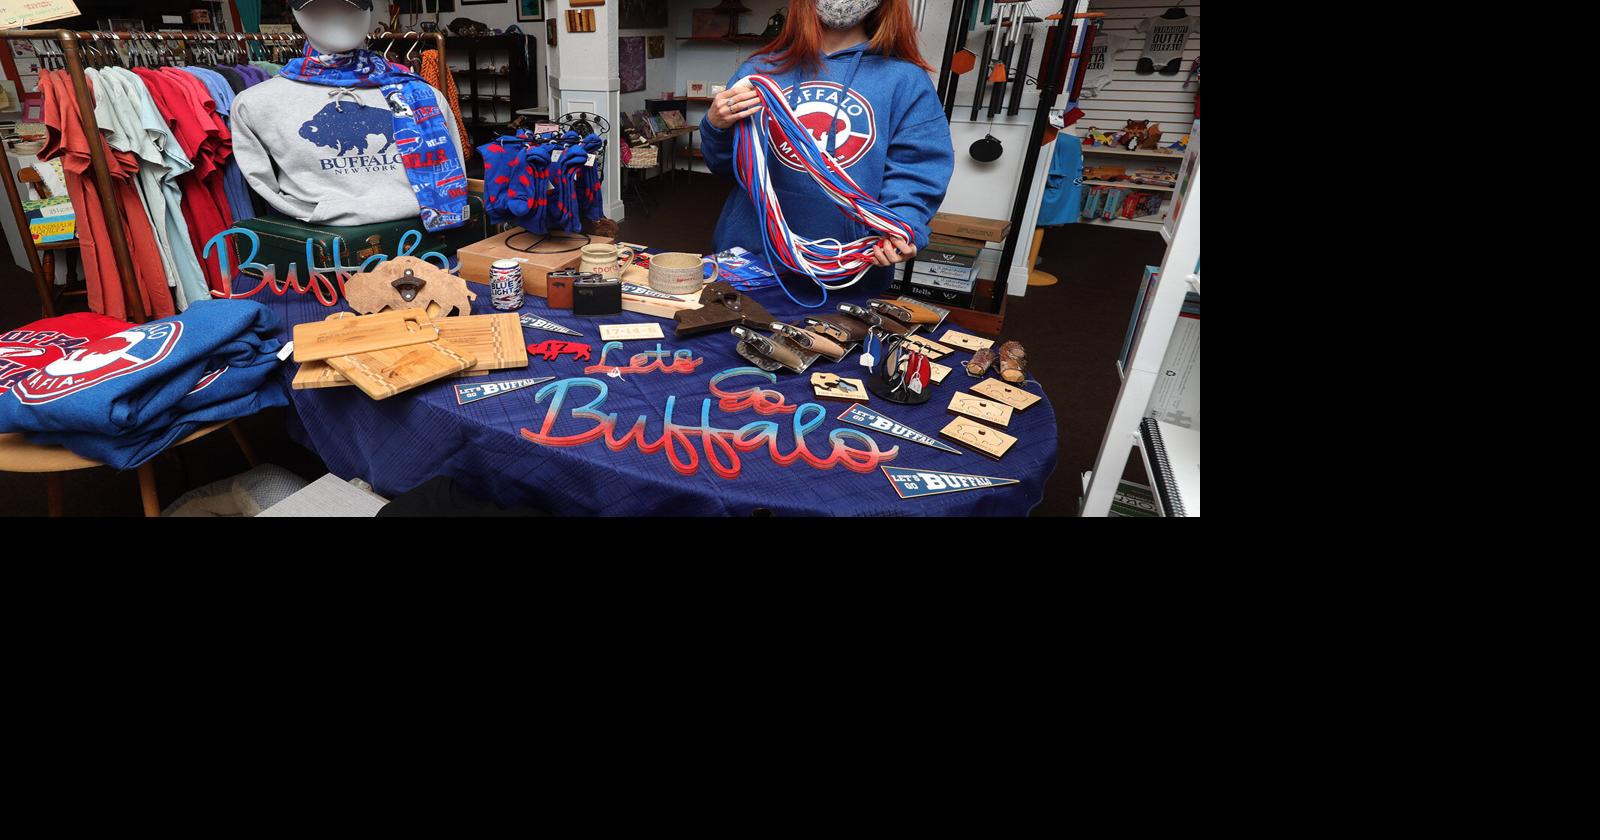 Gallery: Buffalo Bills-themed merchandise with a twist